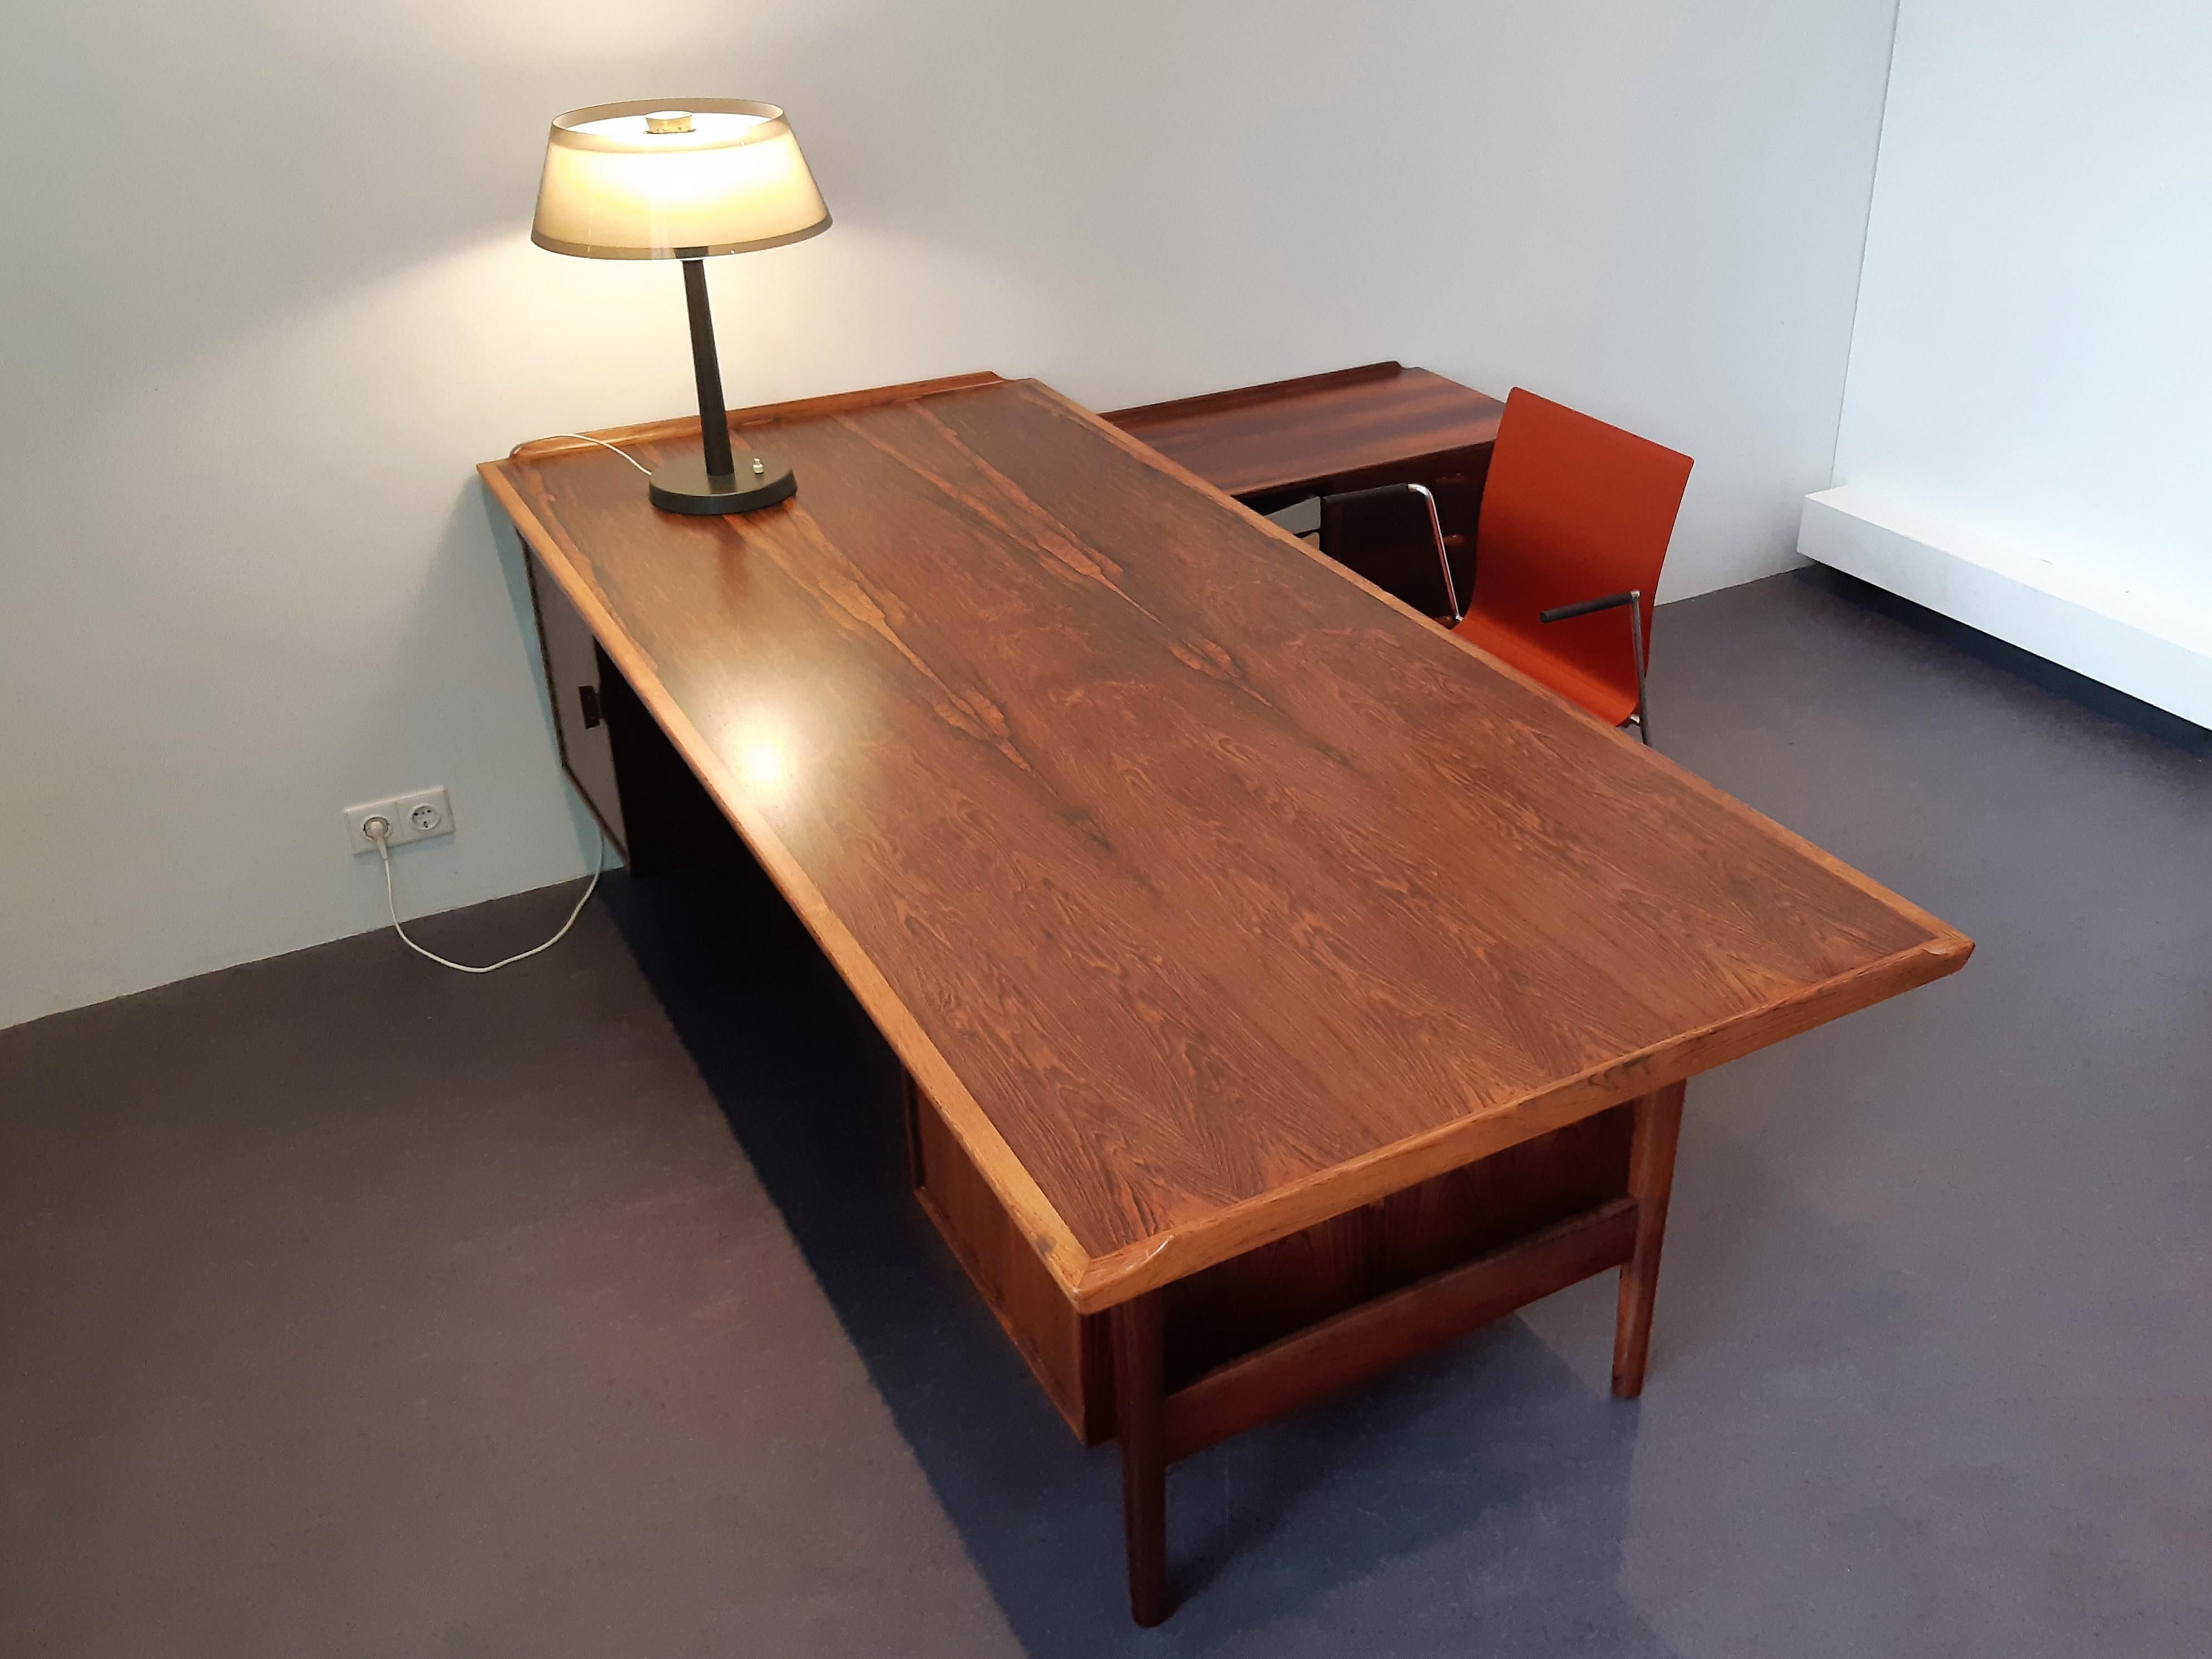 Mid-Century Modern Executive Desk in Rosewood by Arne Vodder for Sibast Møbelfabrik, Denmark 1950's